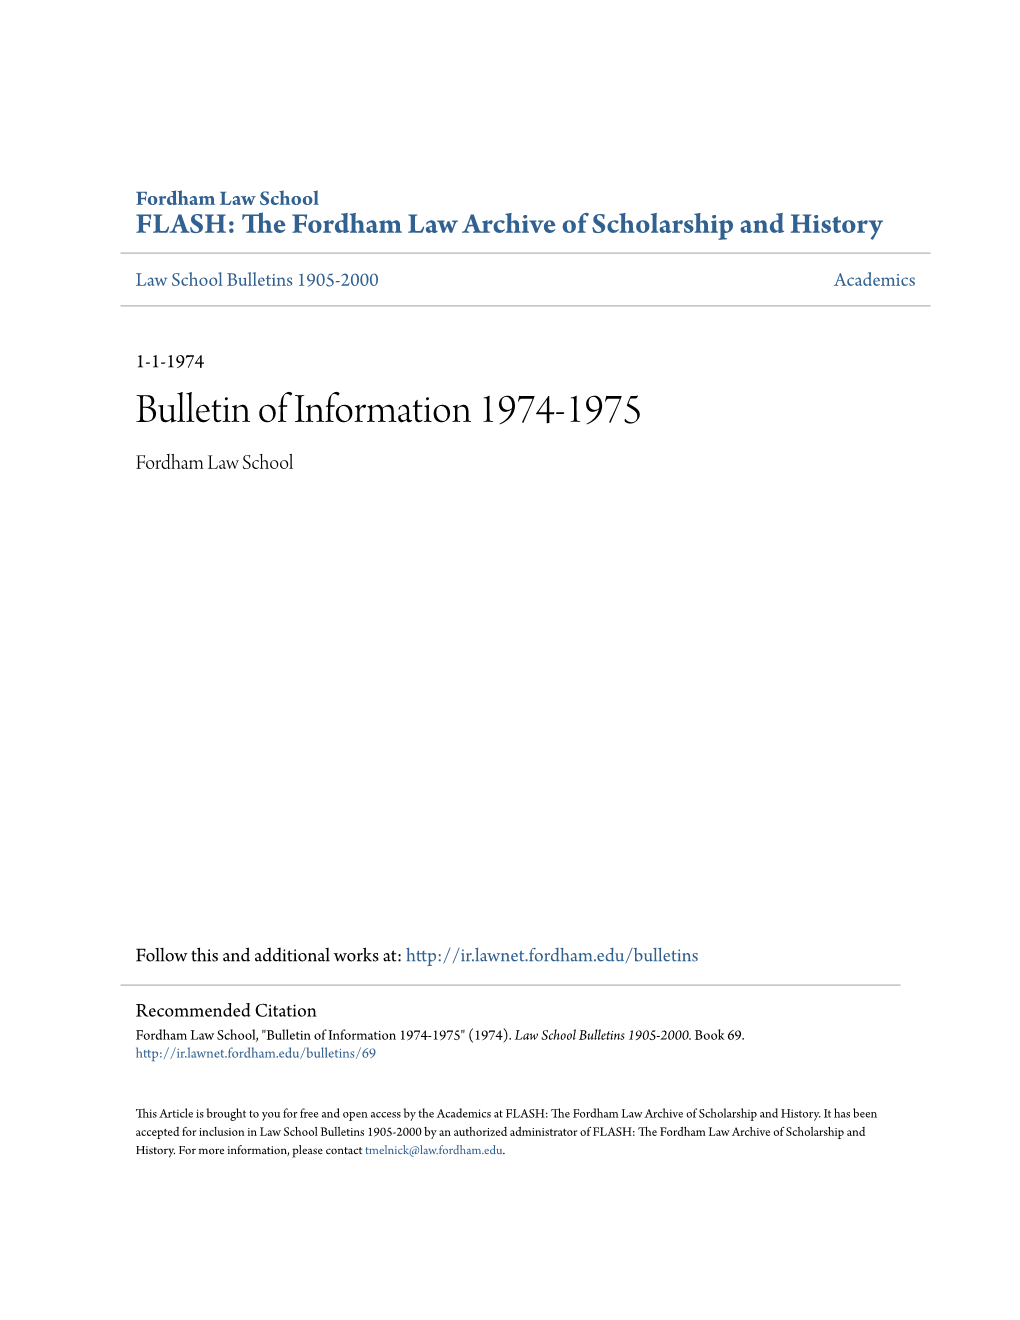 Bulletin of Information 1974-1975 Fordham Law School